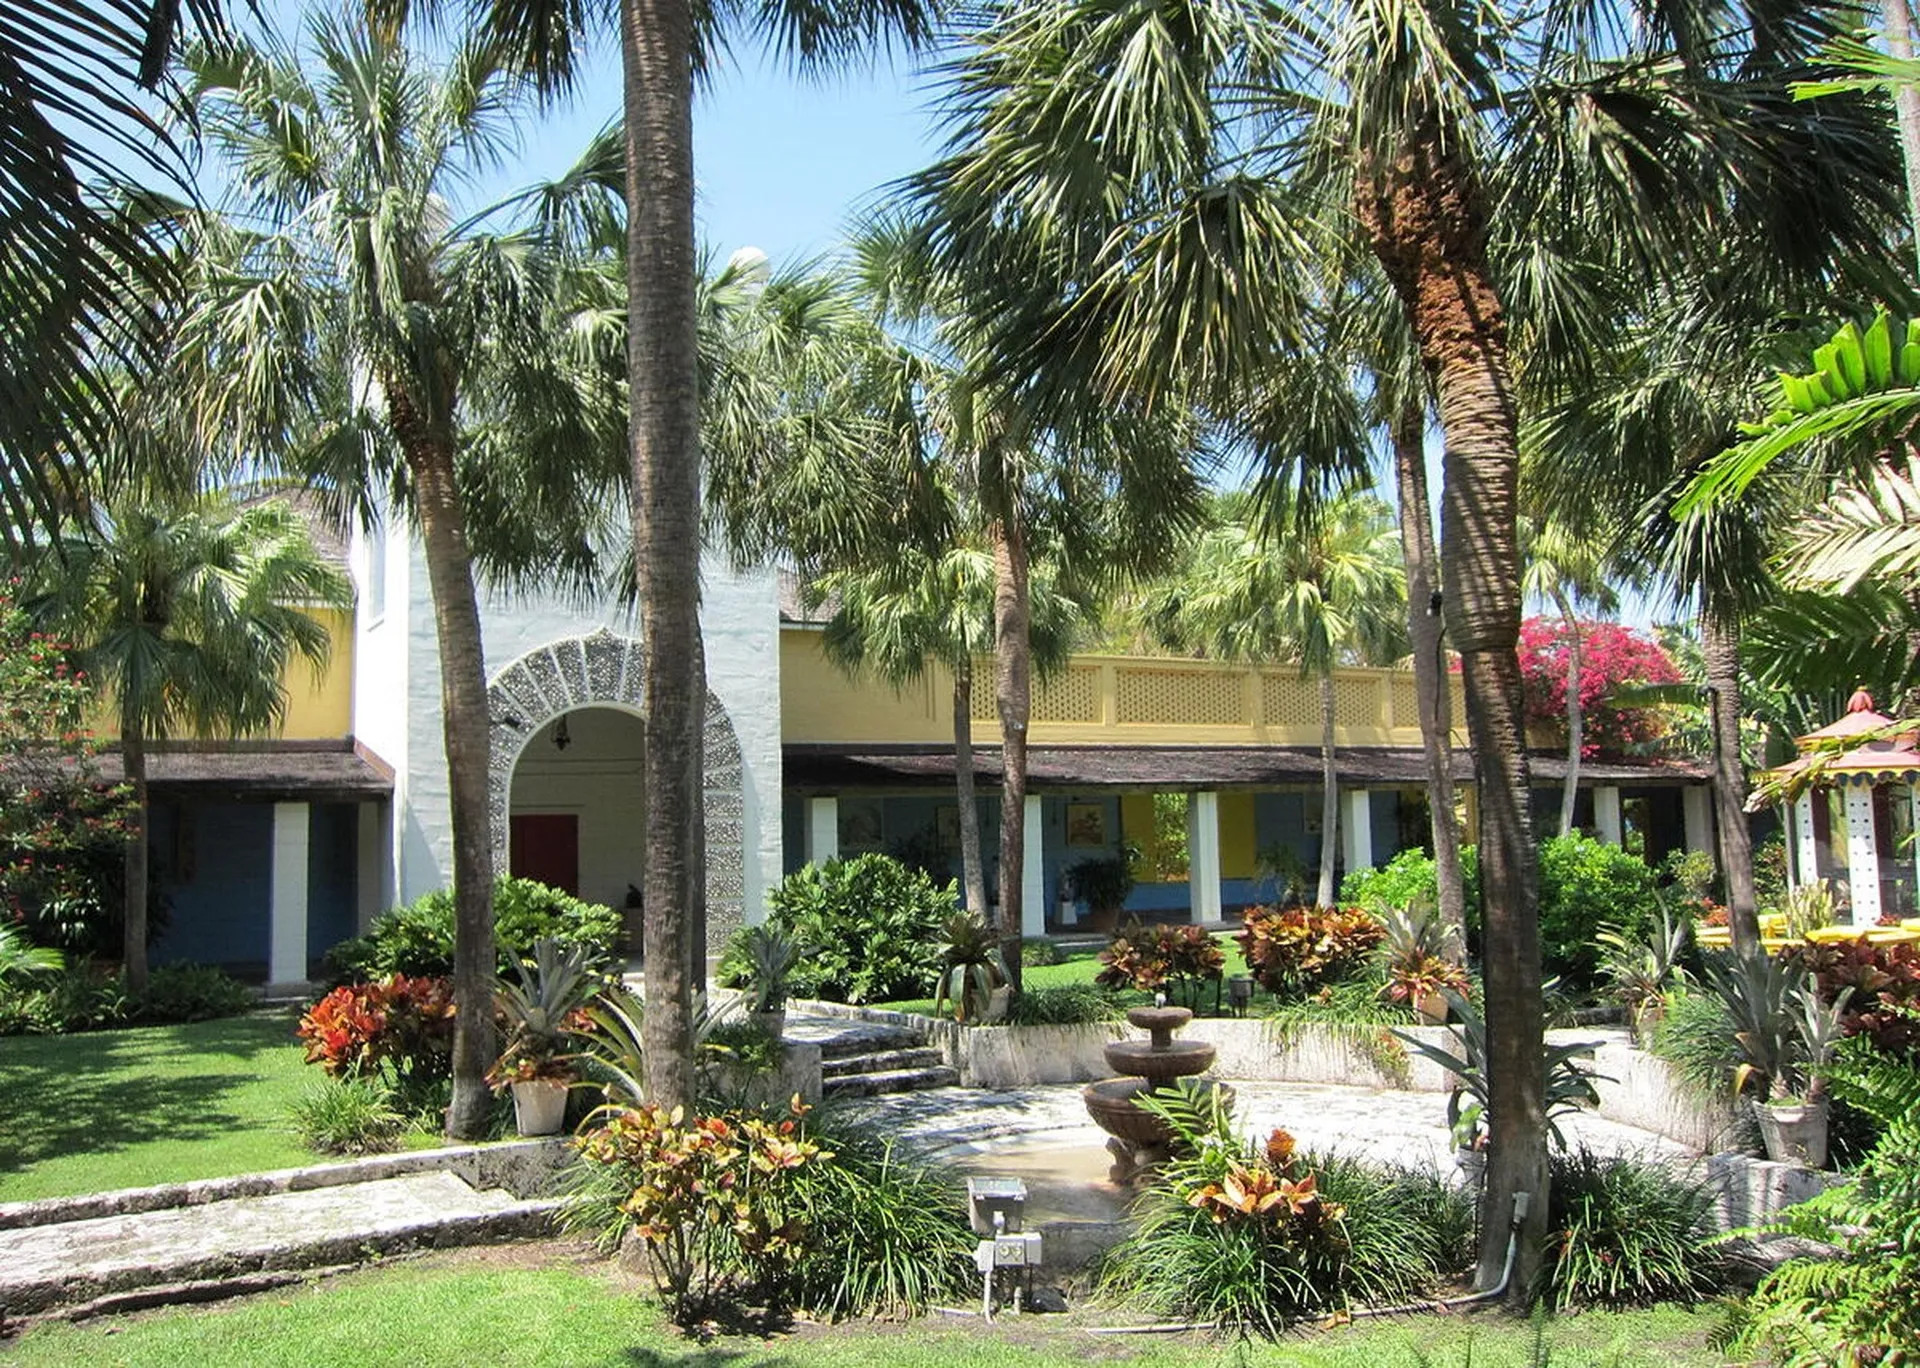 Explore Fort Lauderdale